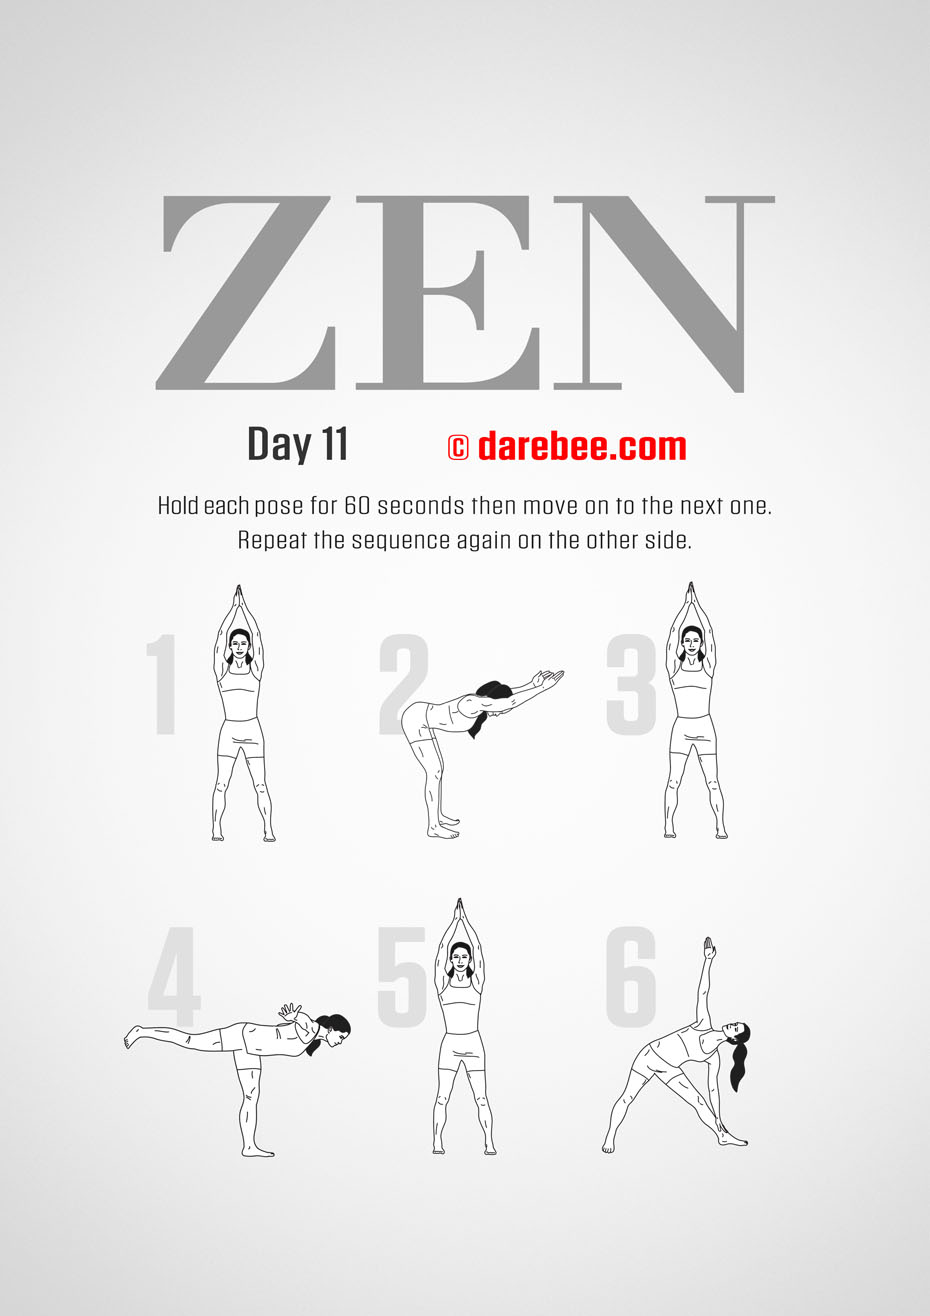 ZEN - 30 Day Yoga And Meditation Program by DAREBEE